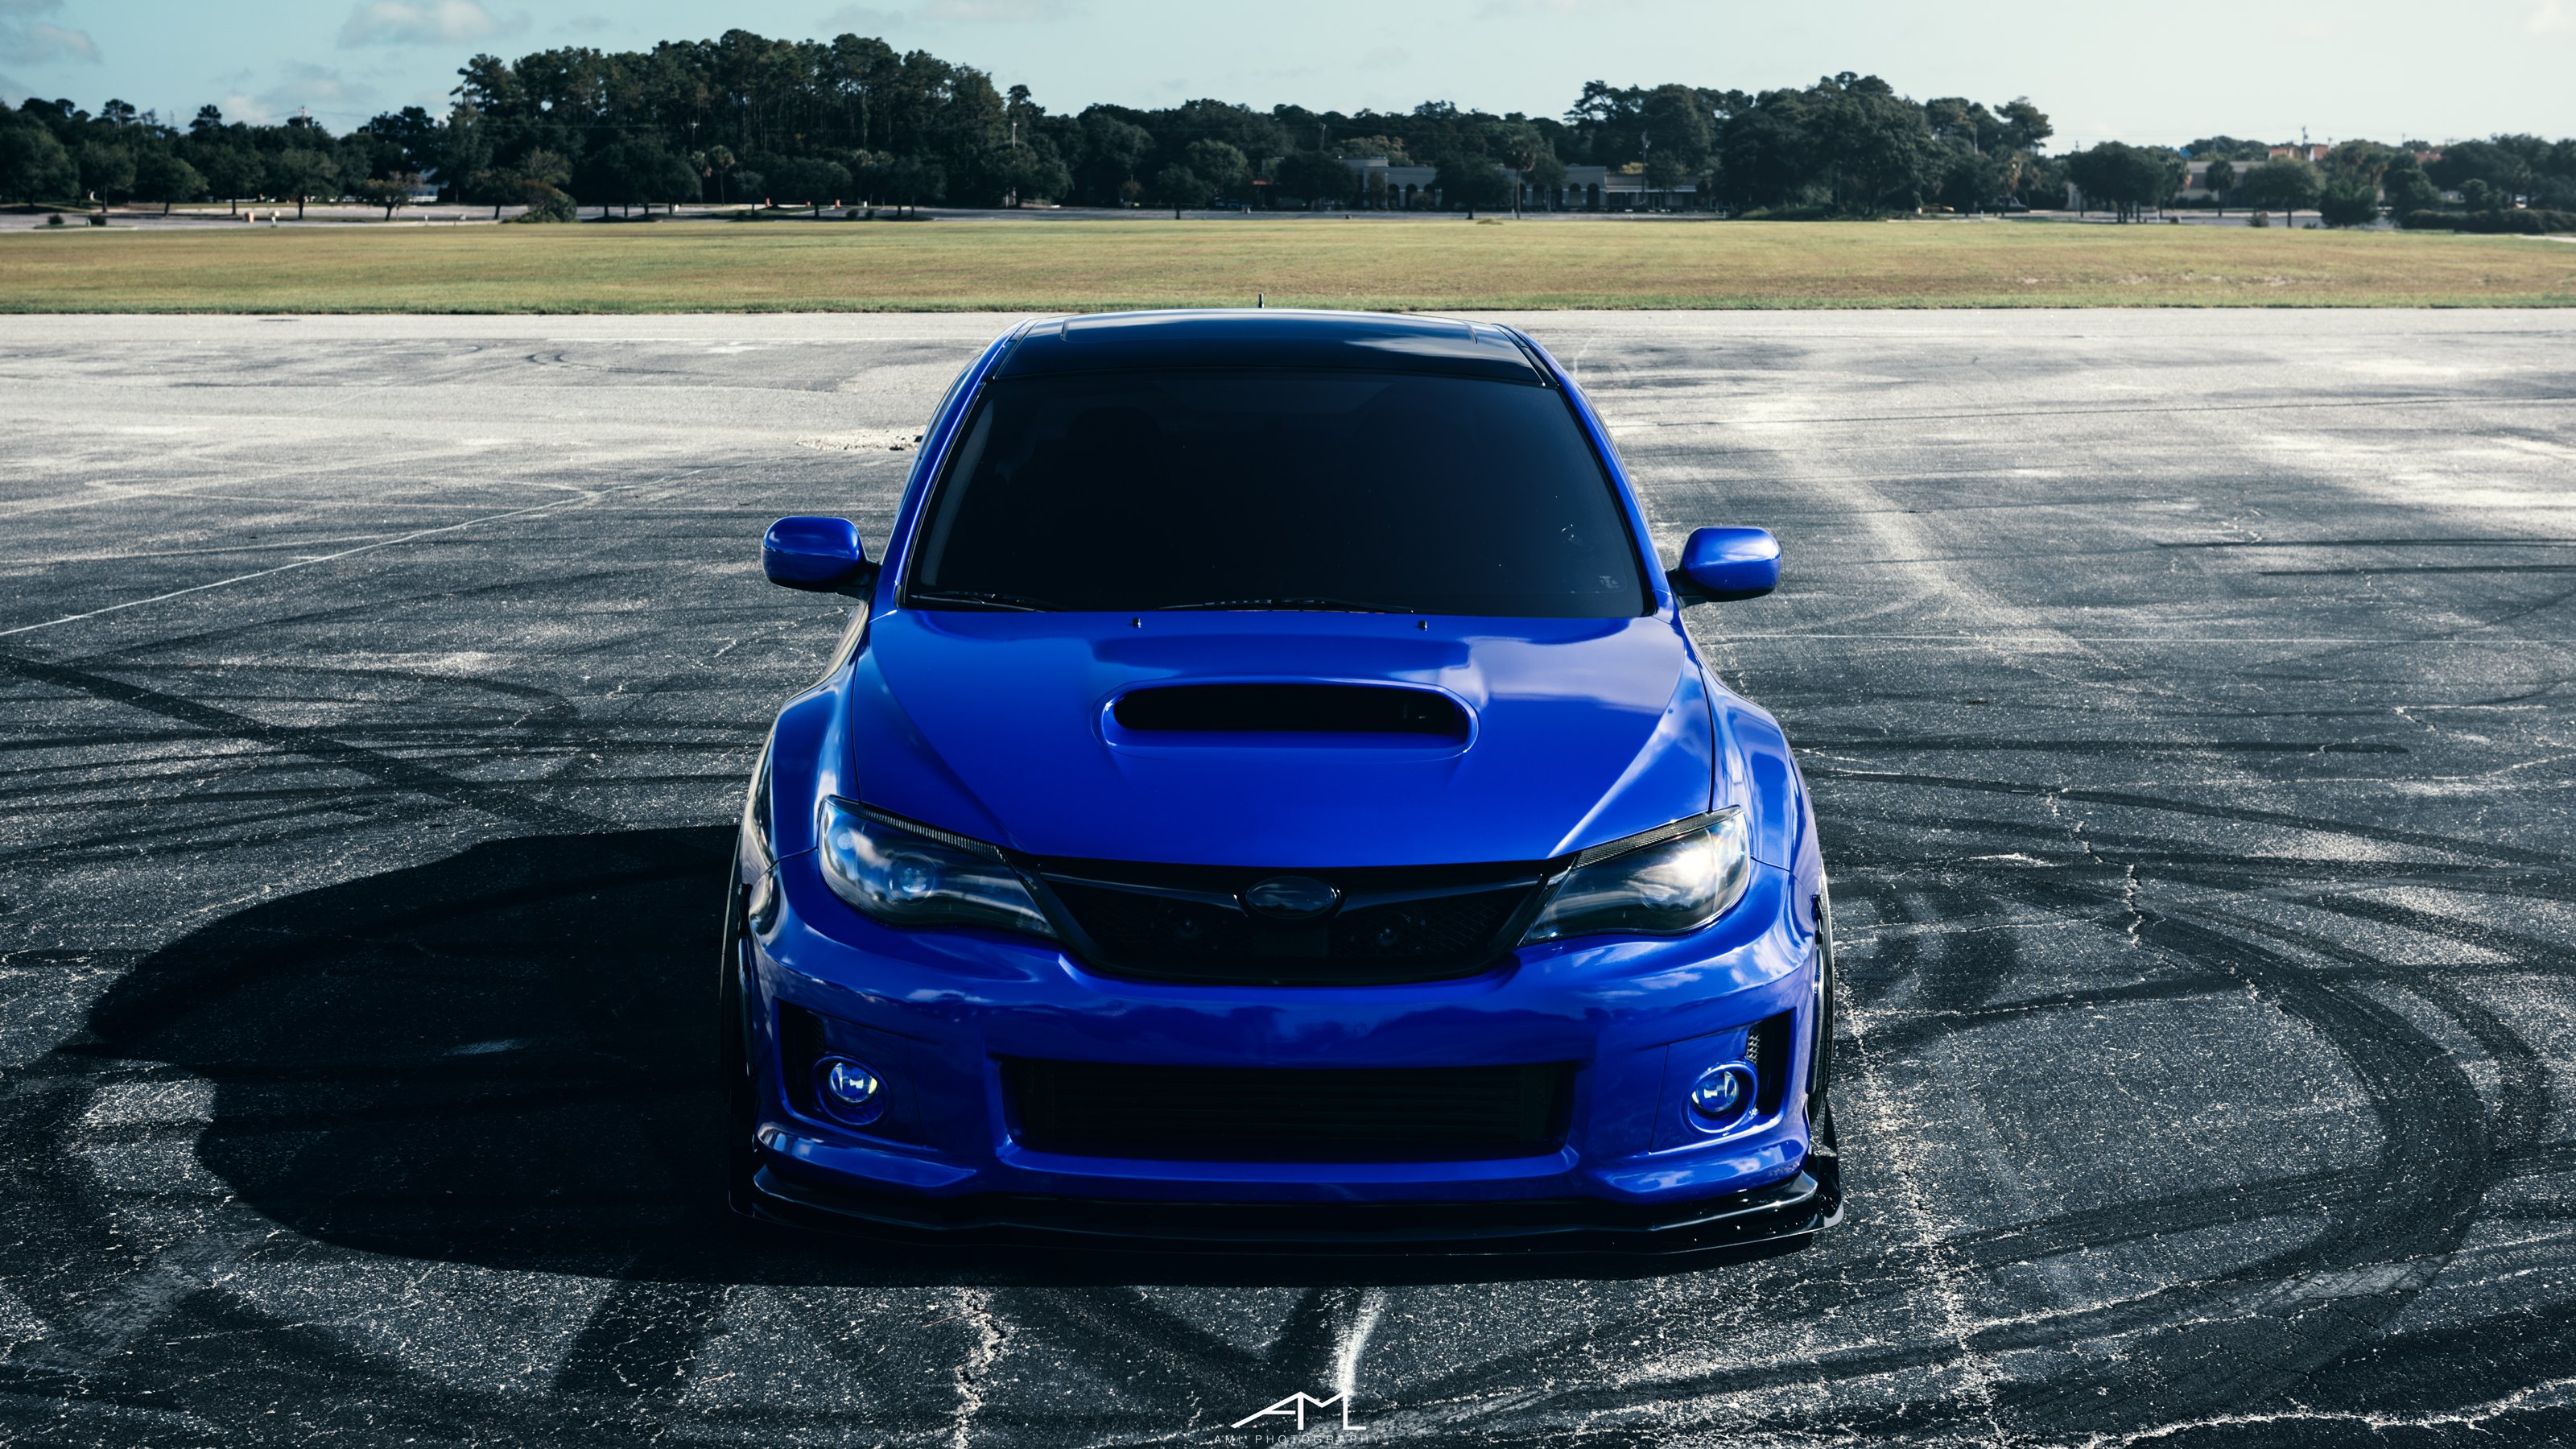 Custom Vented Hood on Blue Stanced Subaru WRX - Photo by Arlen Liverman.